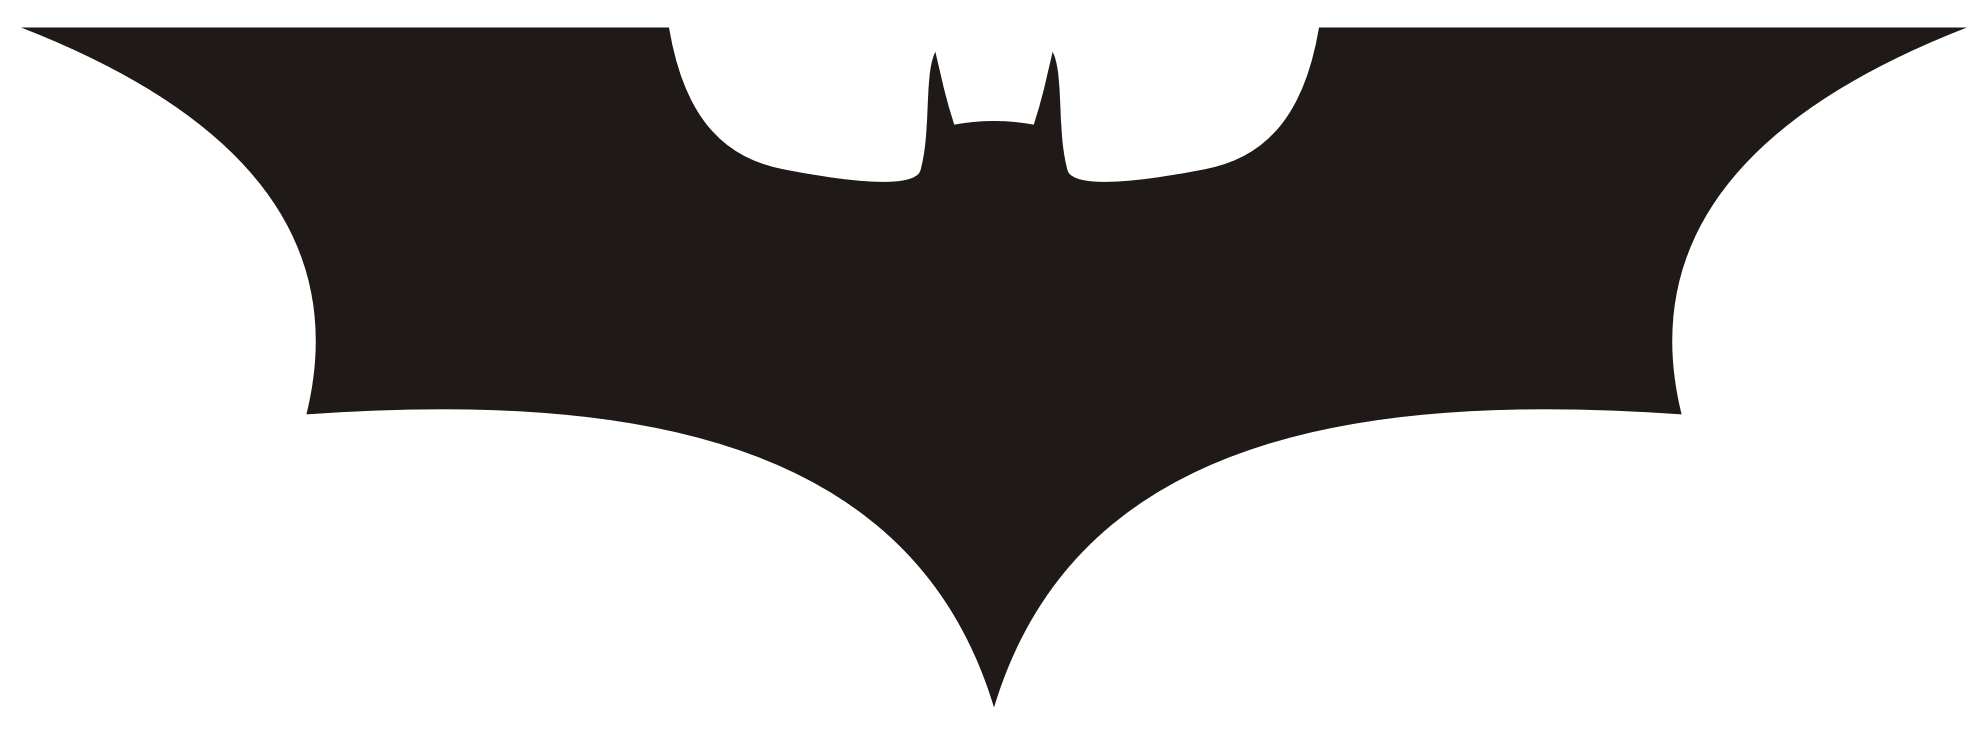 Batman 9 Vector logo - Free v